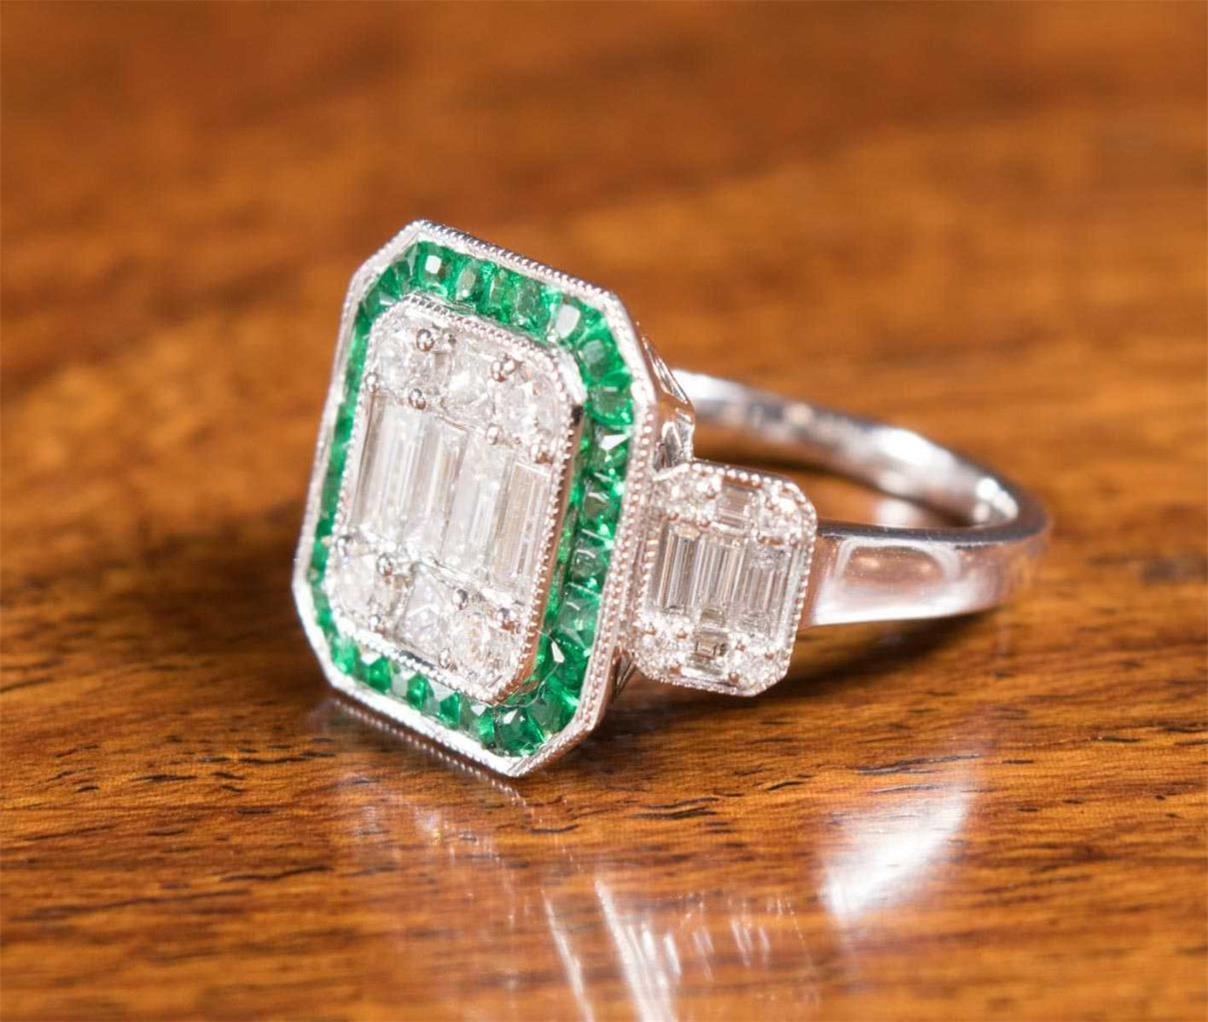 $25 000 engagement ring